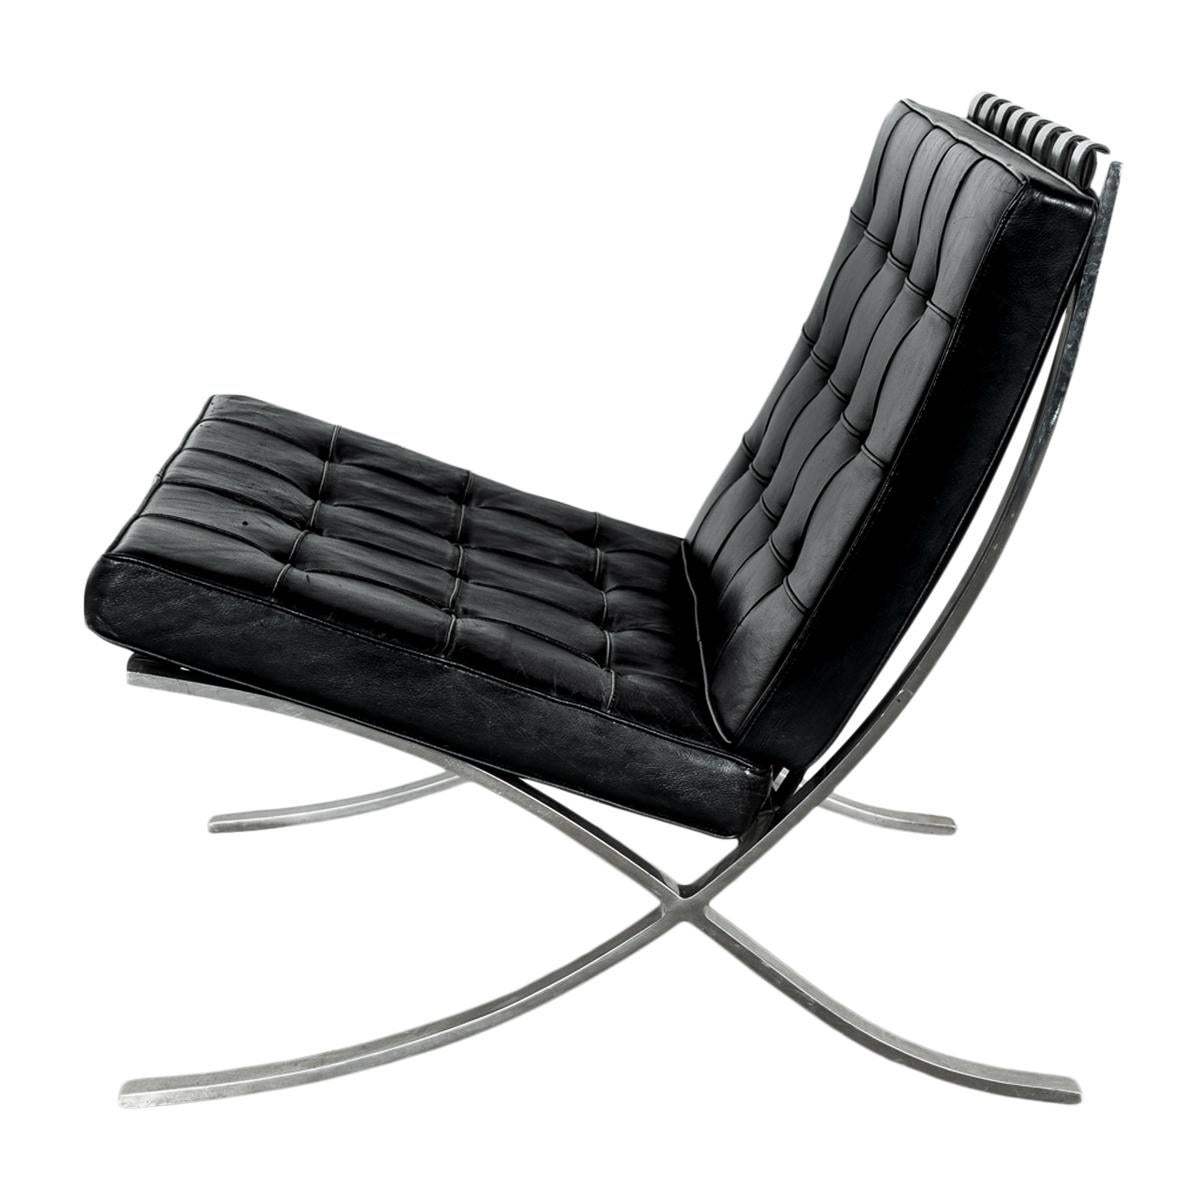 Frühes Paar MCM Knoll Barcelona-Stühle, Mies van der Rohe 1961, schwarzes Leder im Angebot 2